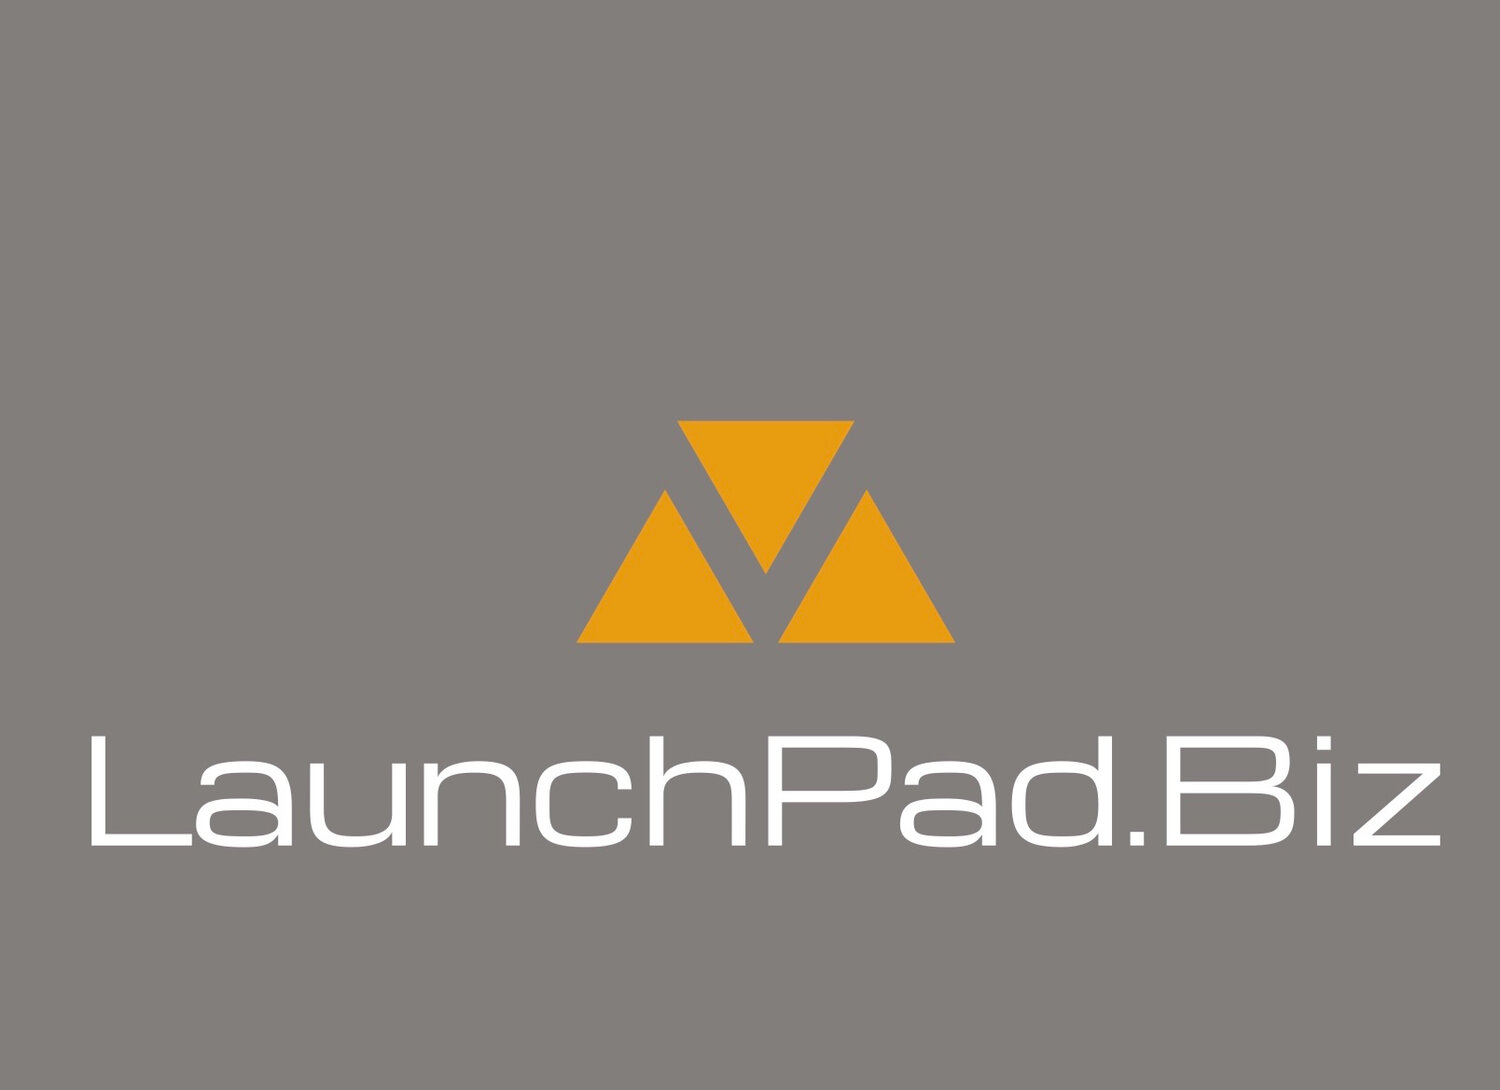 The LaunchPad.Biz